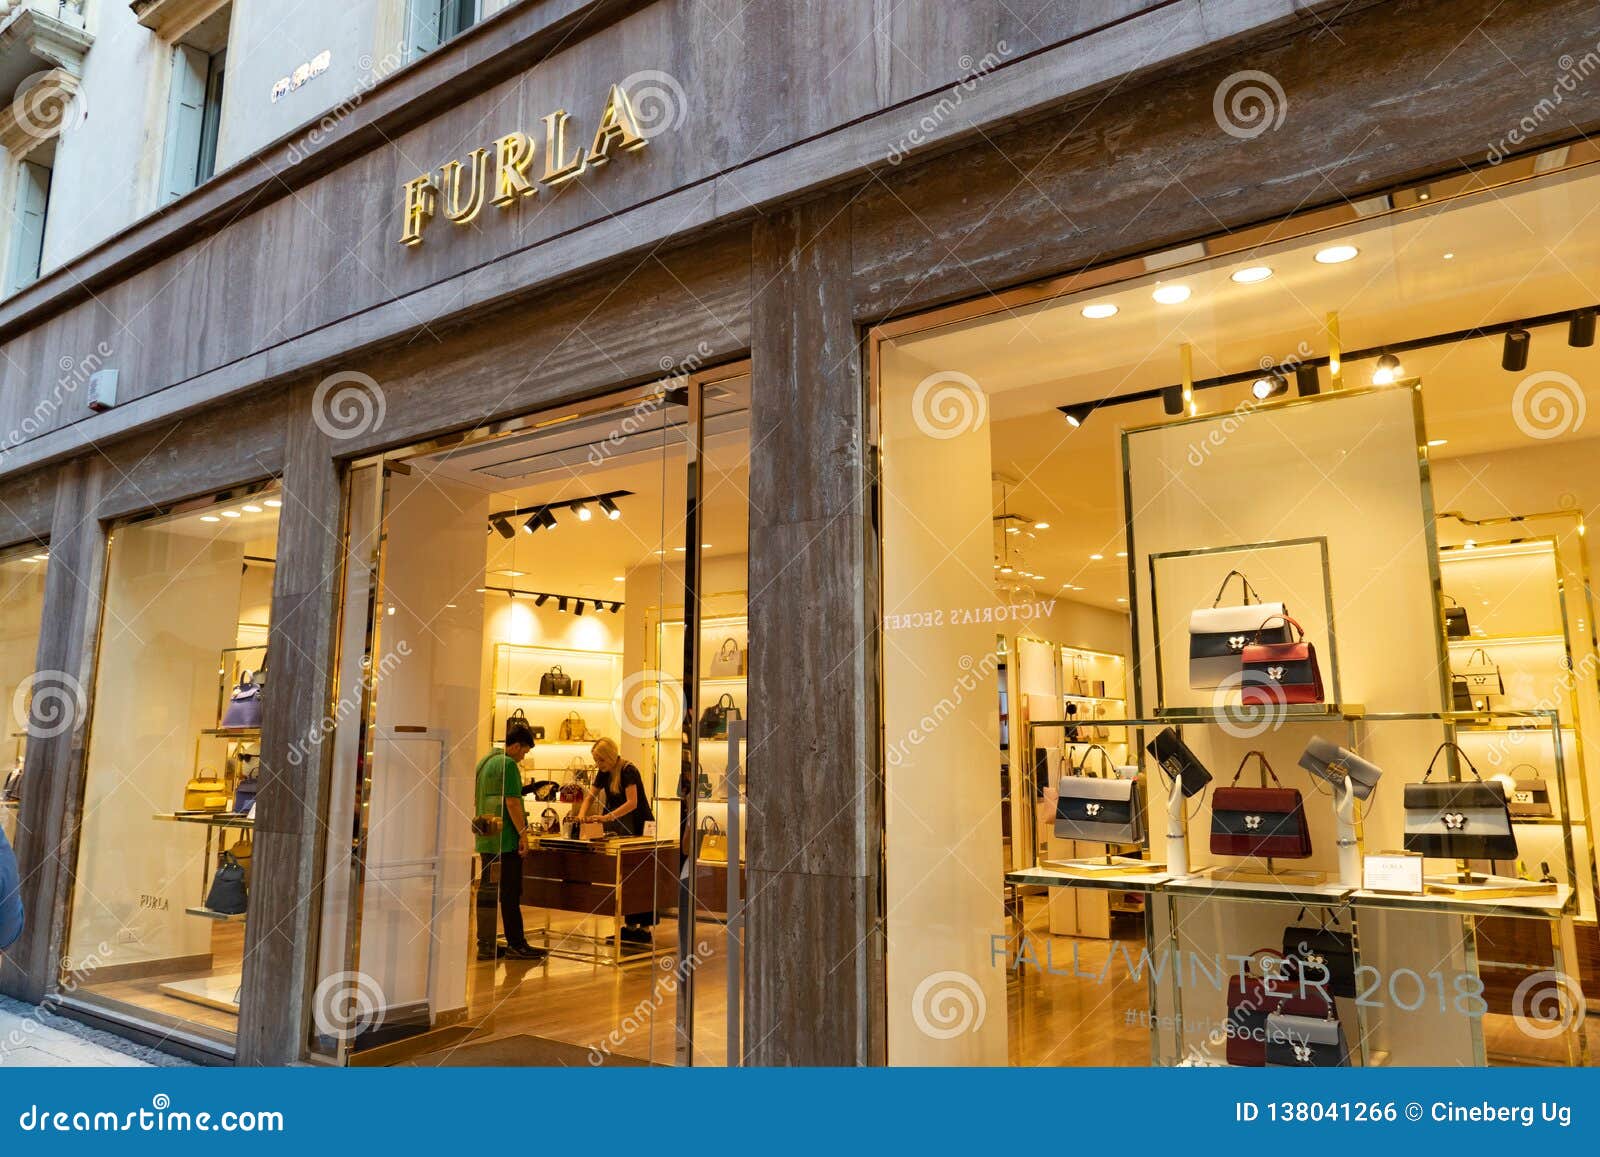 Furla store editorial photo. Image of brand, label, accessories - 138041266